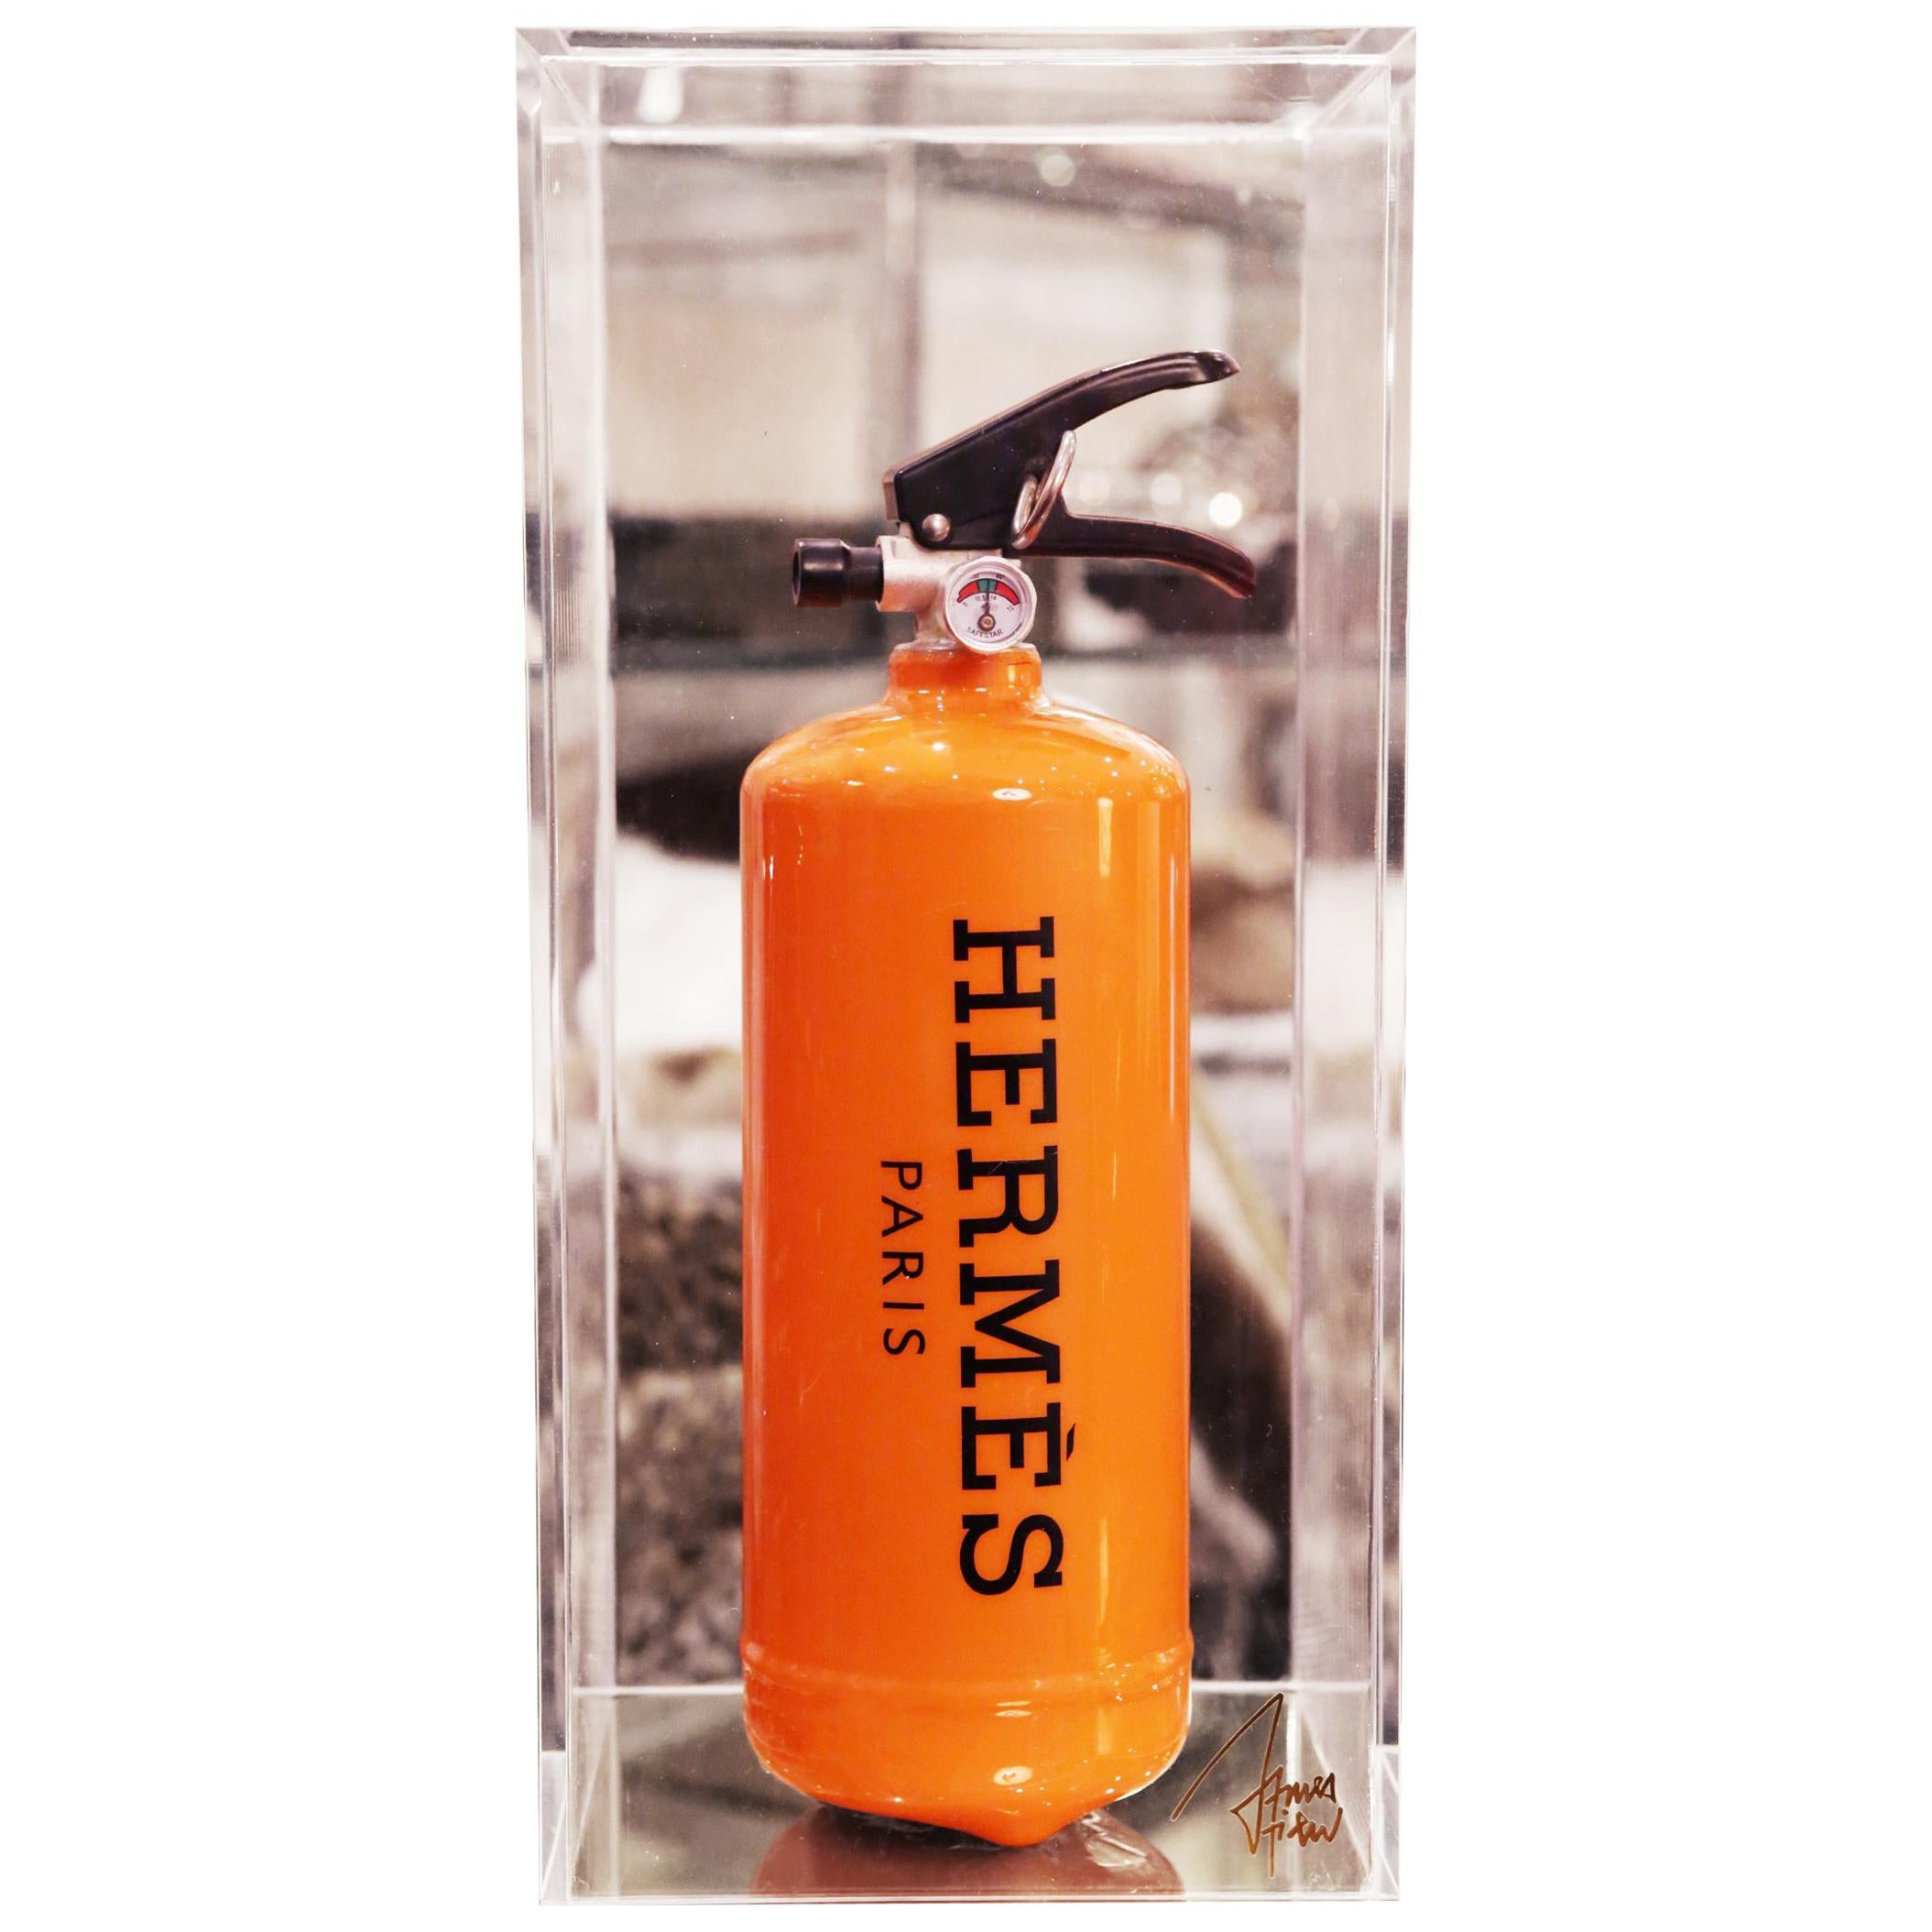 Hermes Paris Extinguisher